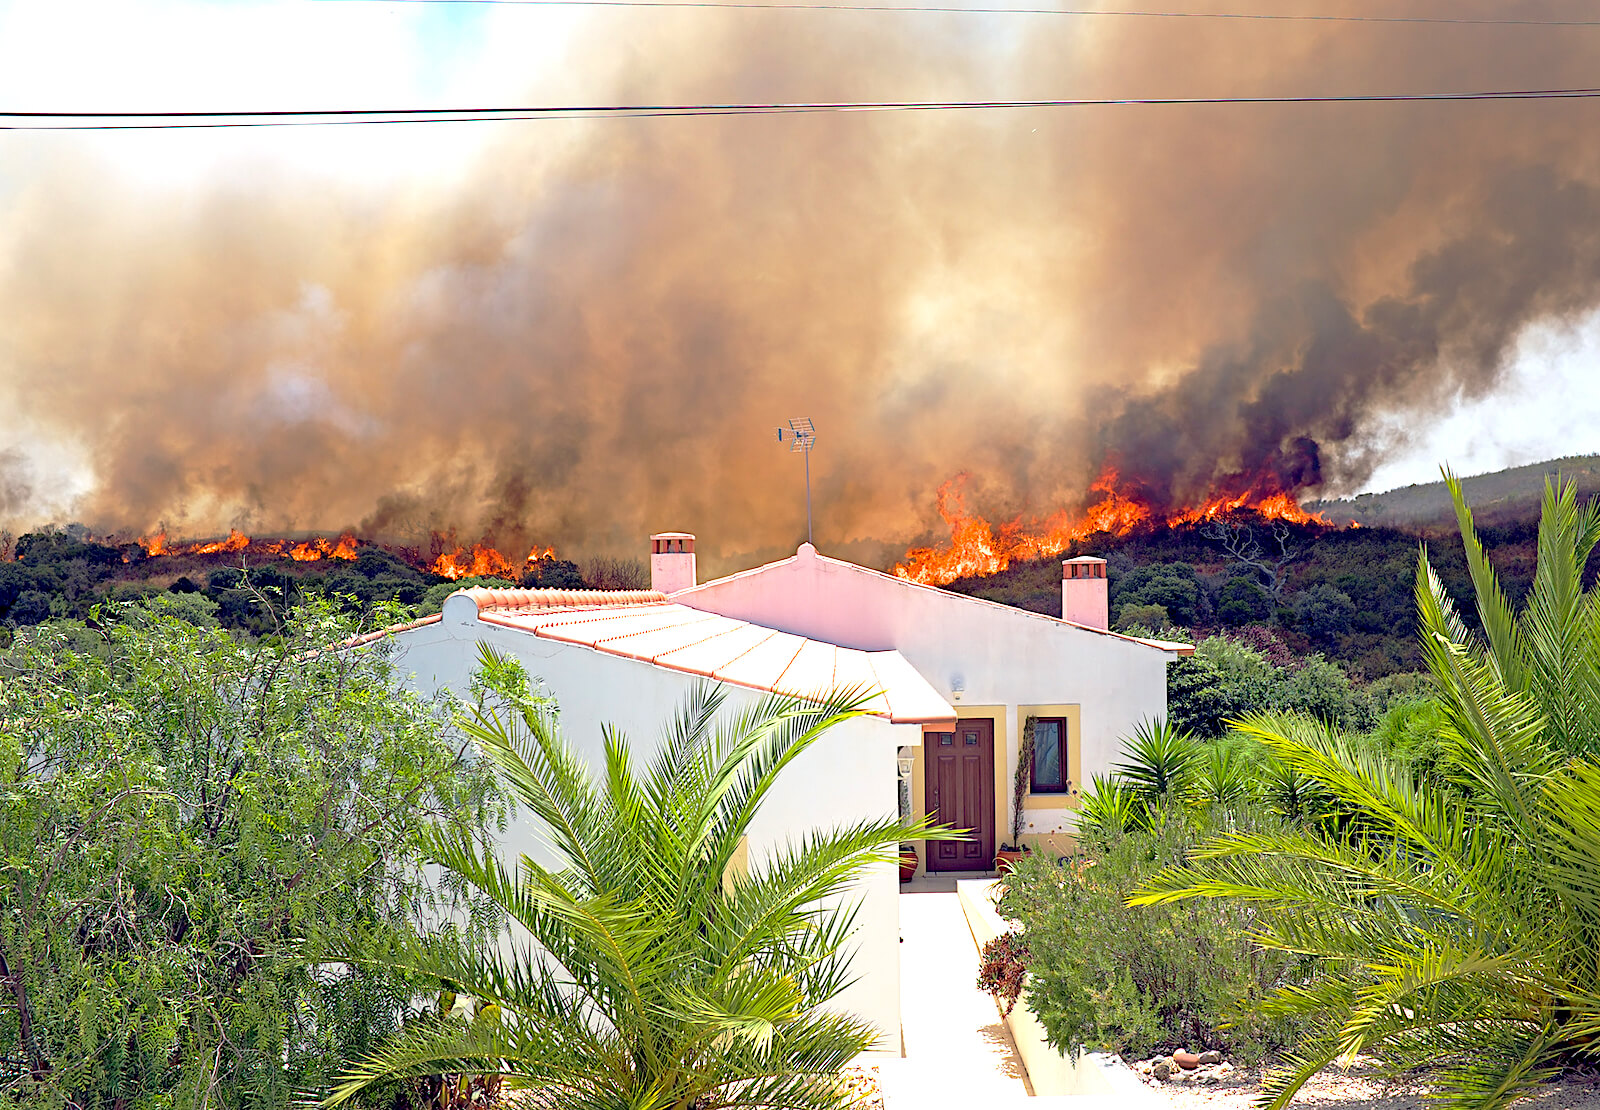 Wildfire Burning Near House